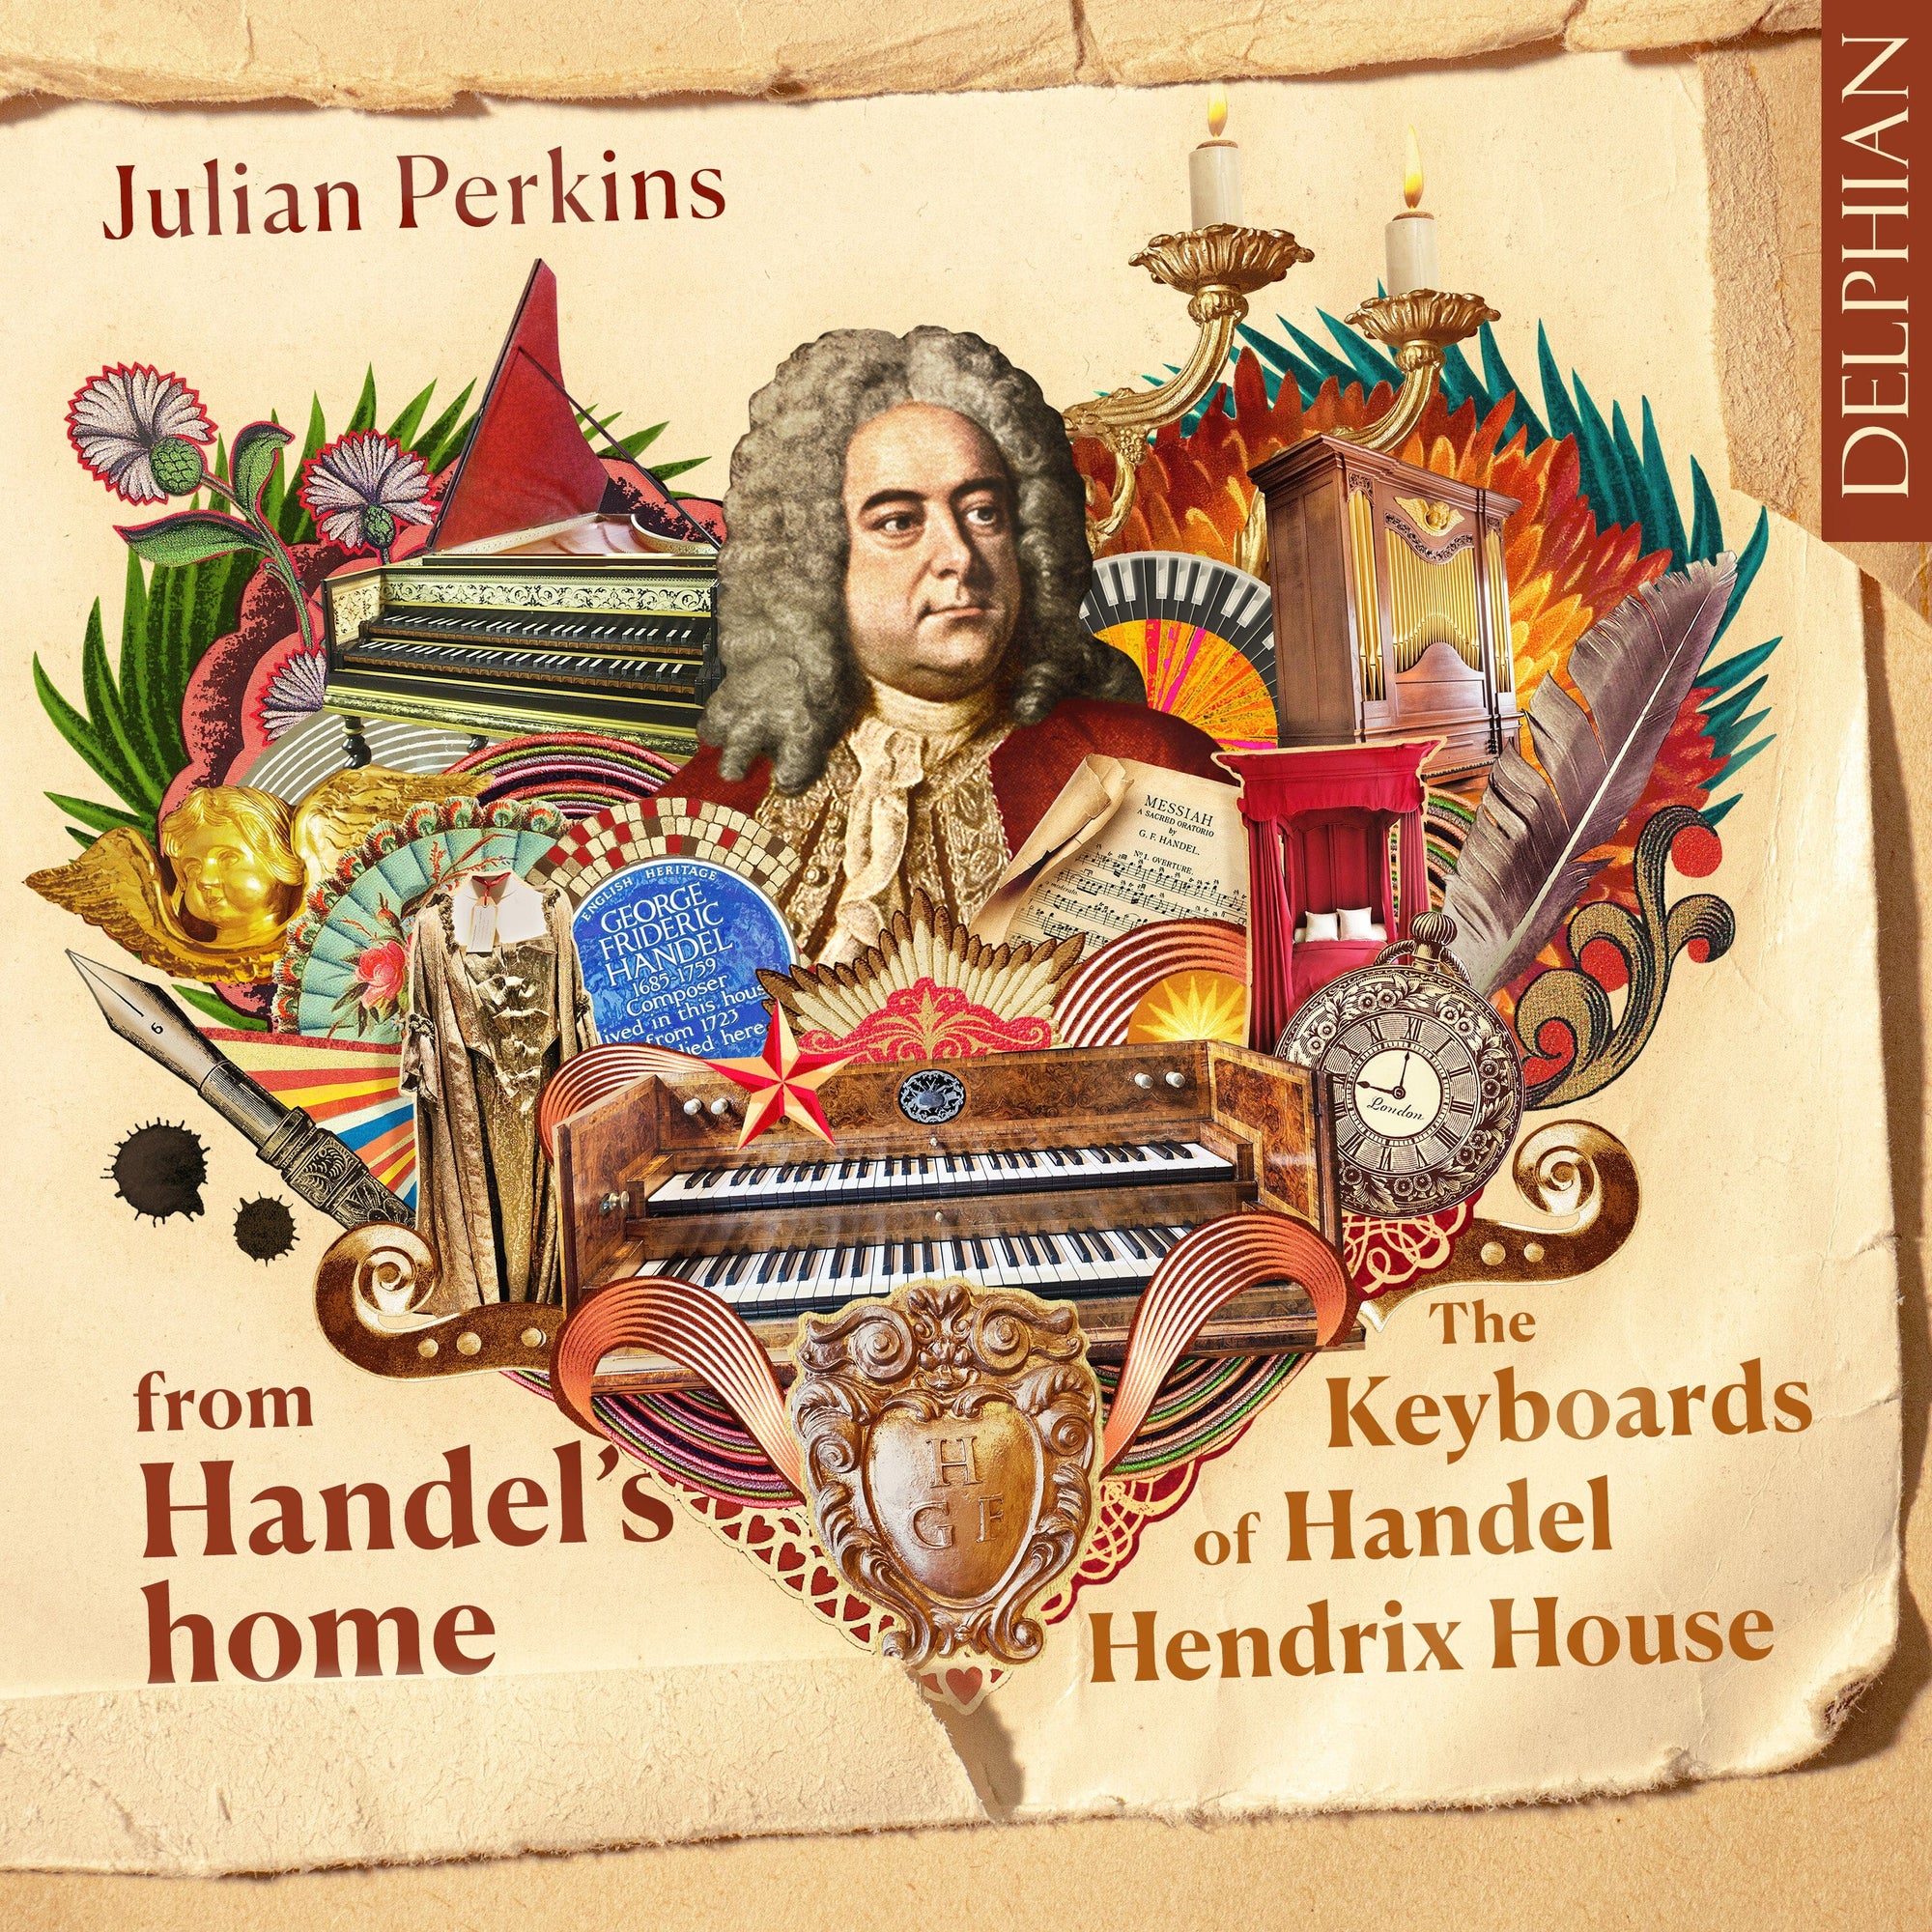 From Handel's Home: The Keyboards of Handel Hendrix House CD Delphian Records